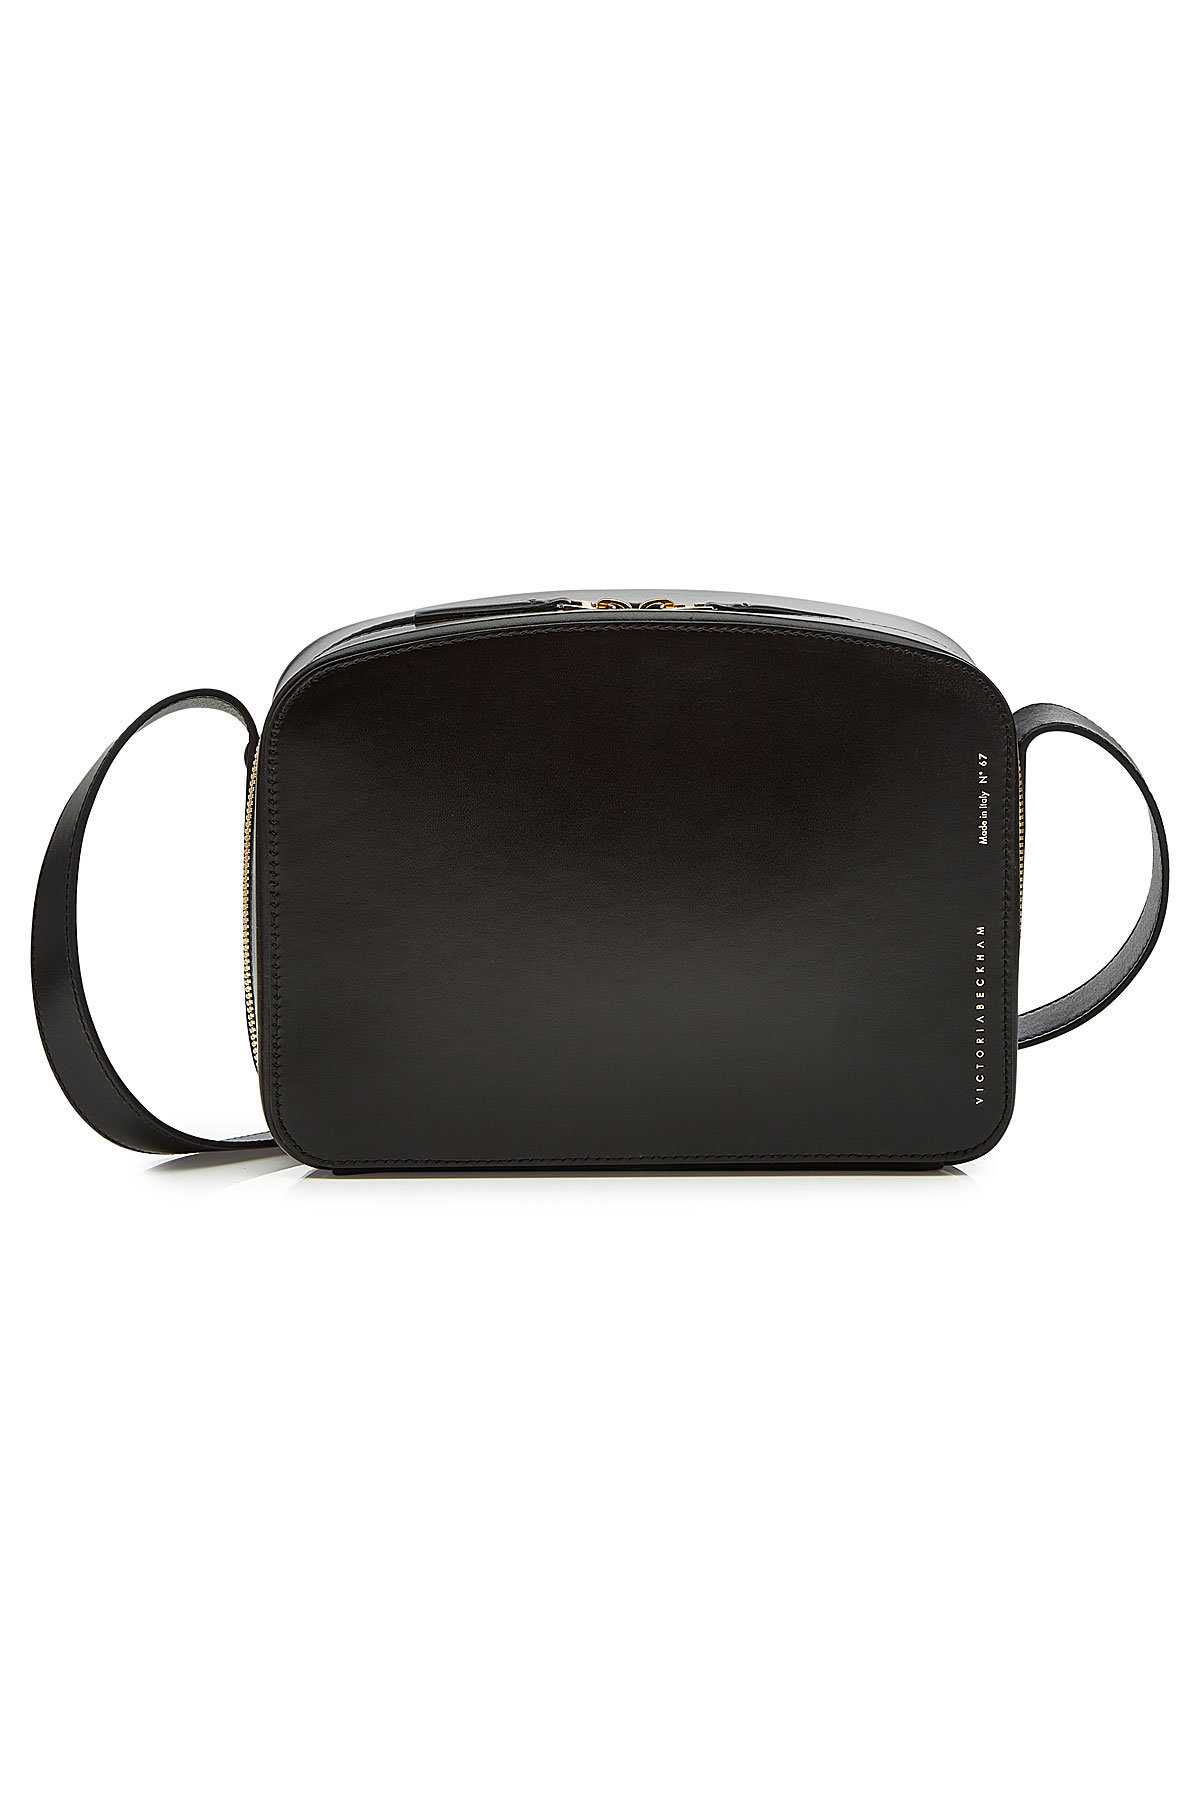 Victoria Beckham - Vanity Leather Camera Bag